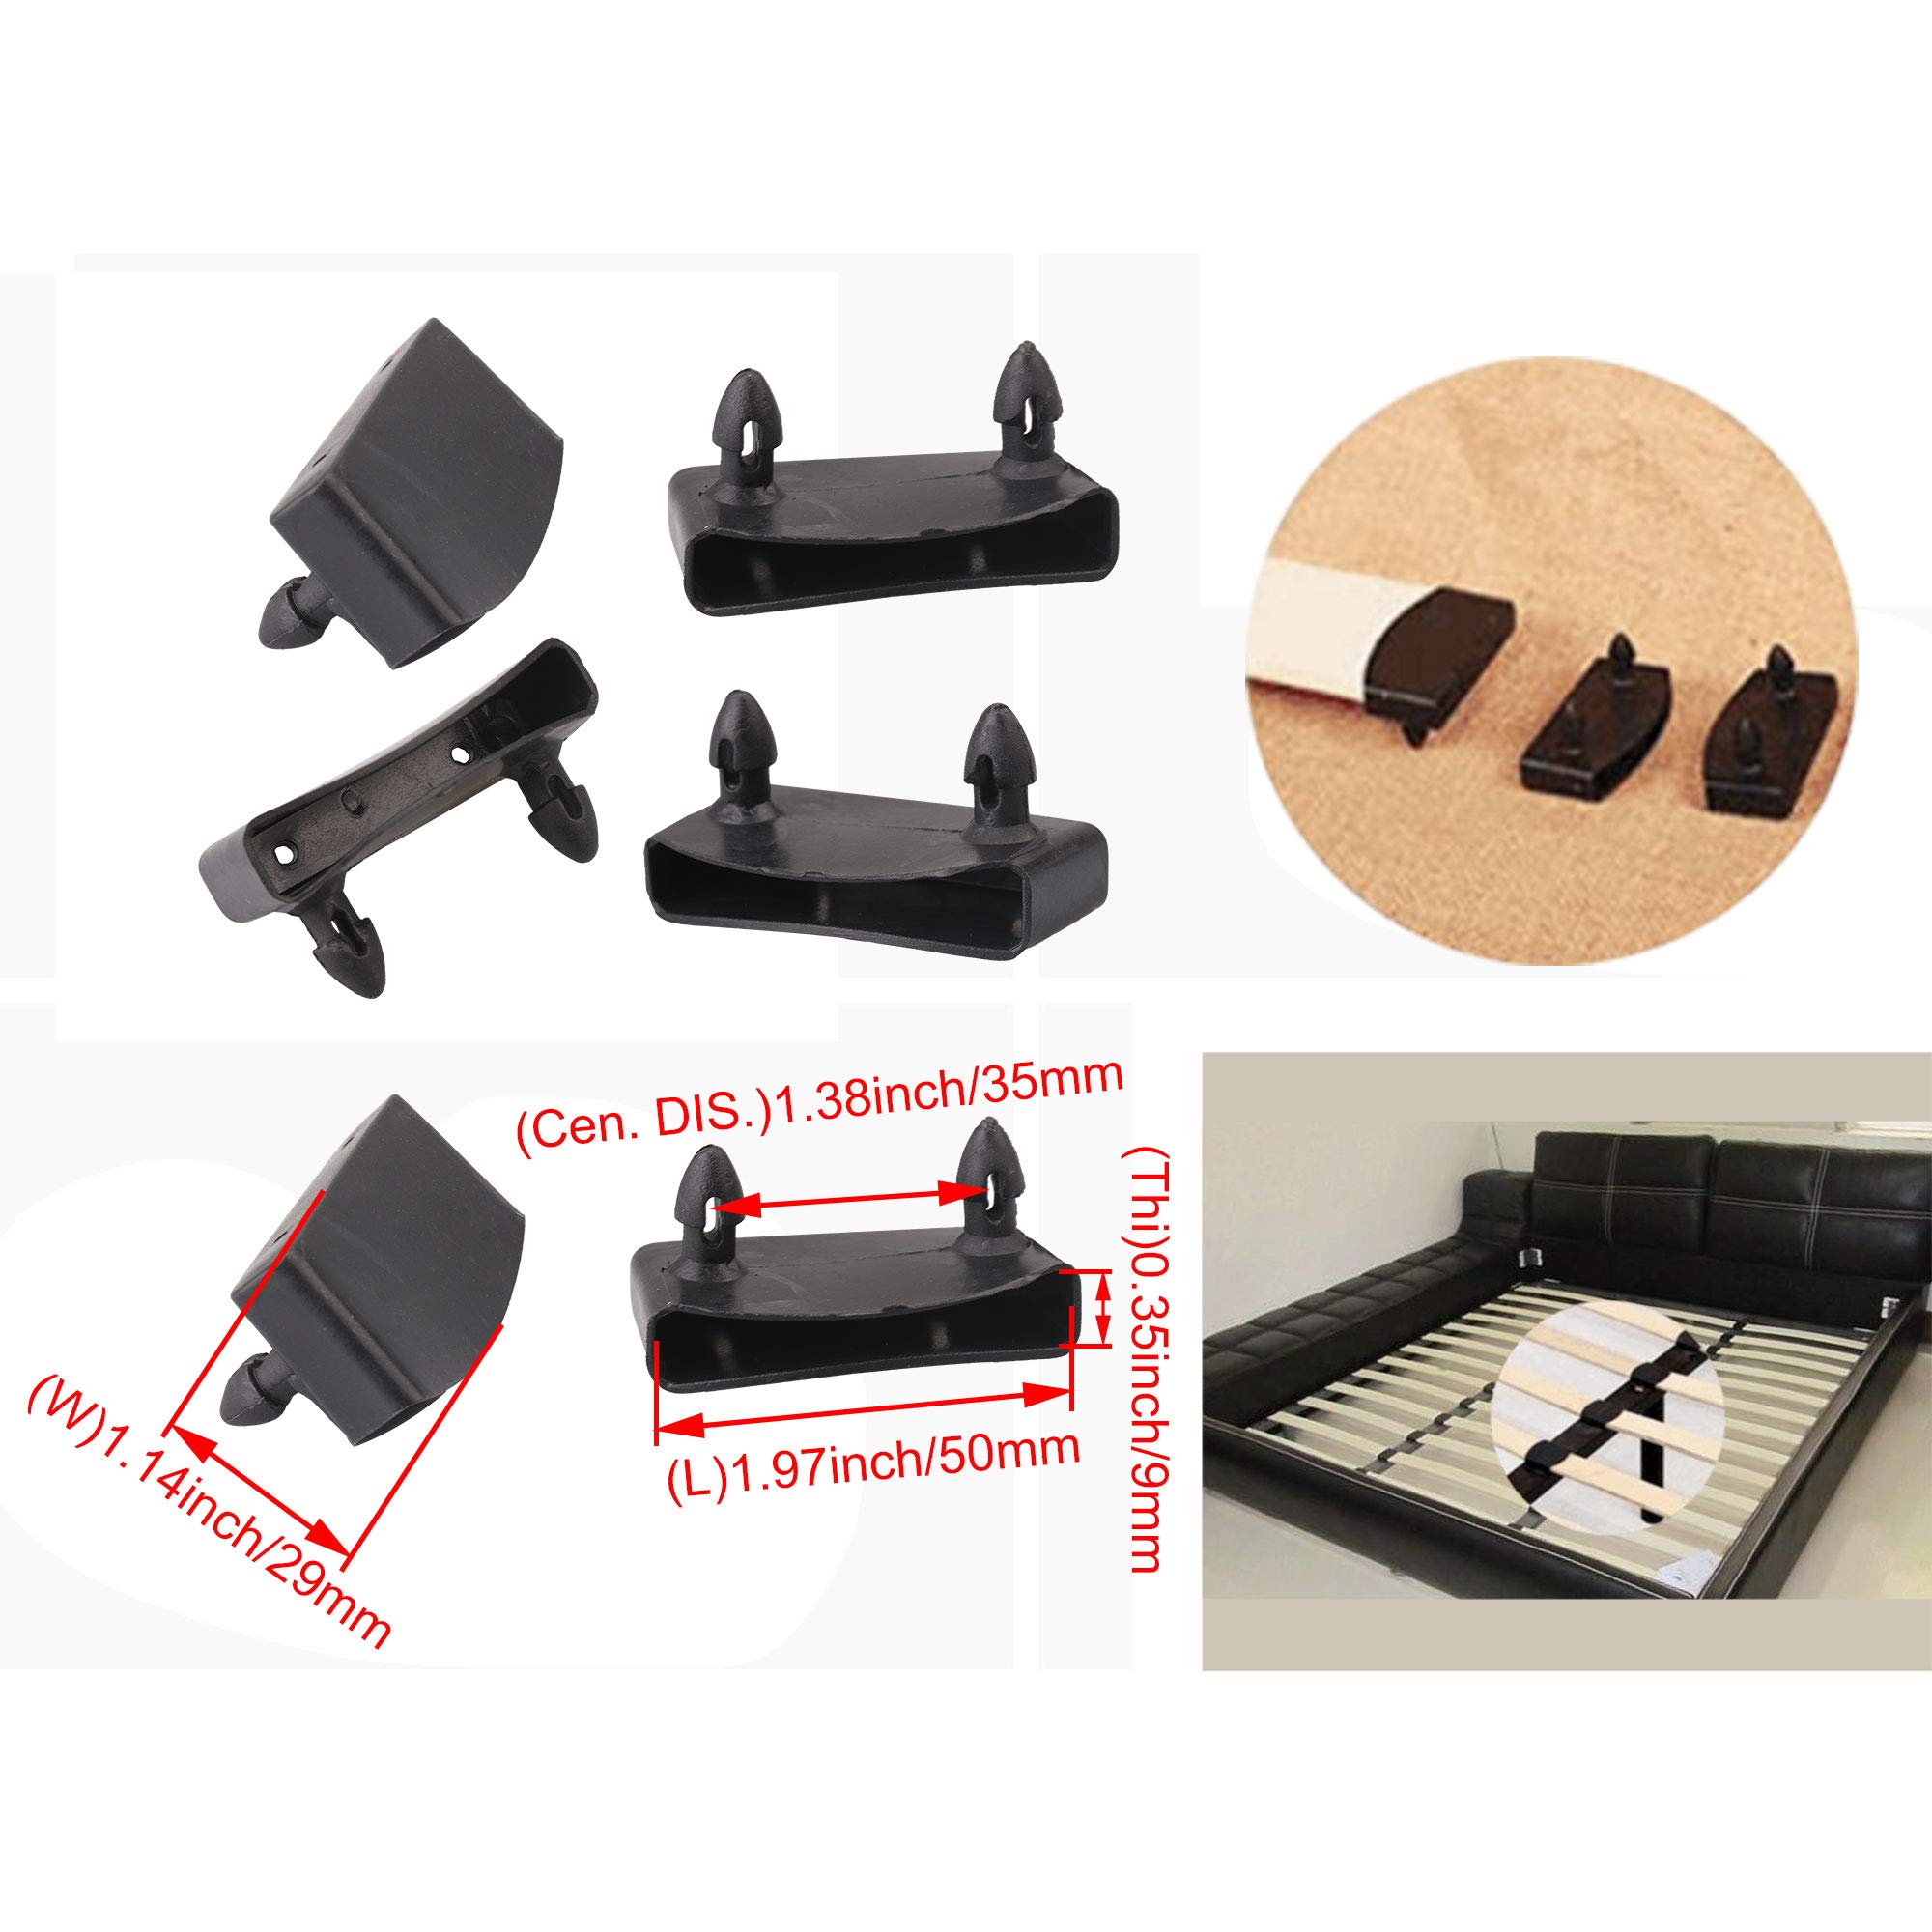 50pcs RDEXP Black Single End Caps 5cm Length Bed Slat Holders Contains Replacement Part Wooden Slats on Bed